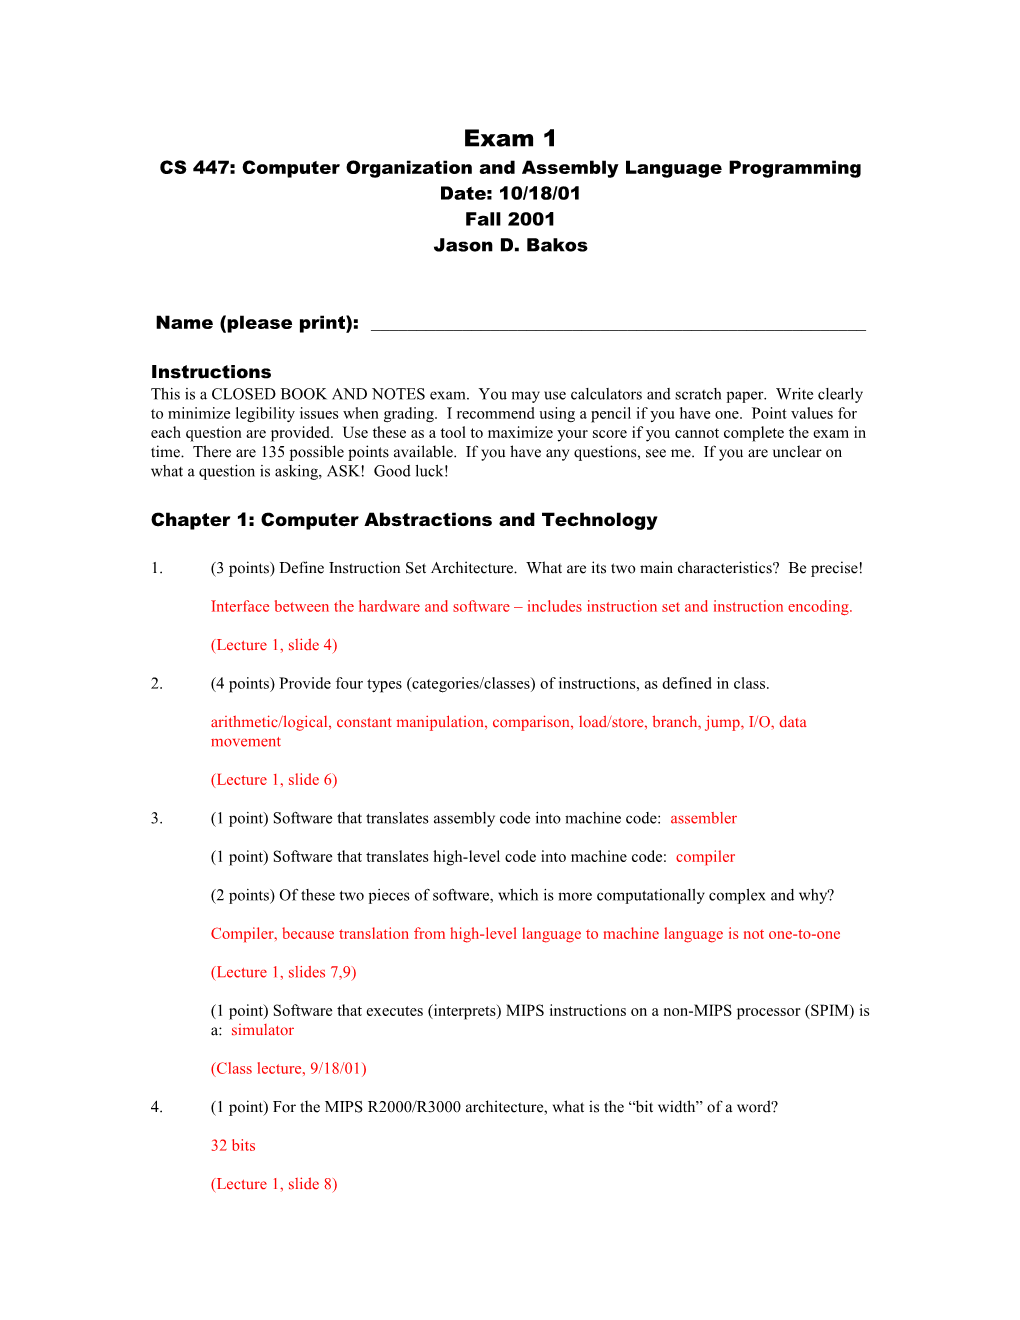 CS 447: Computer Organization and Assembly Language Programming